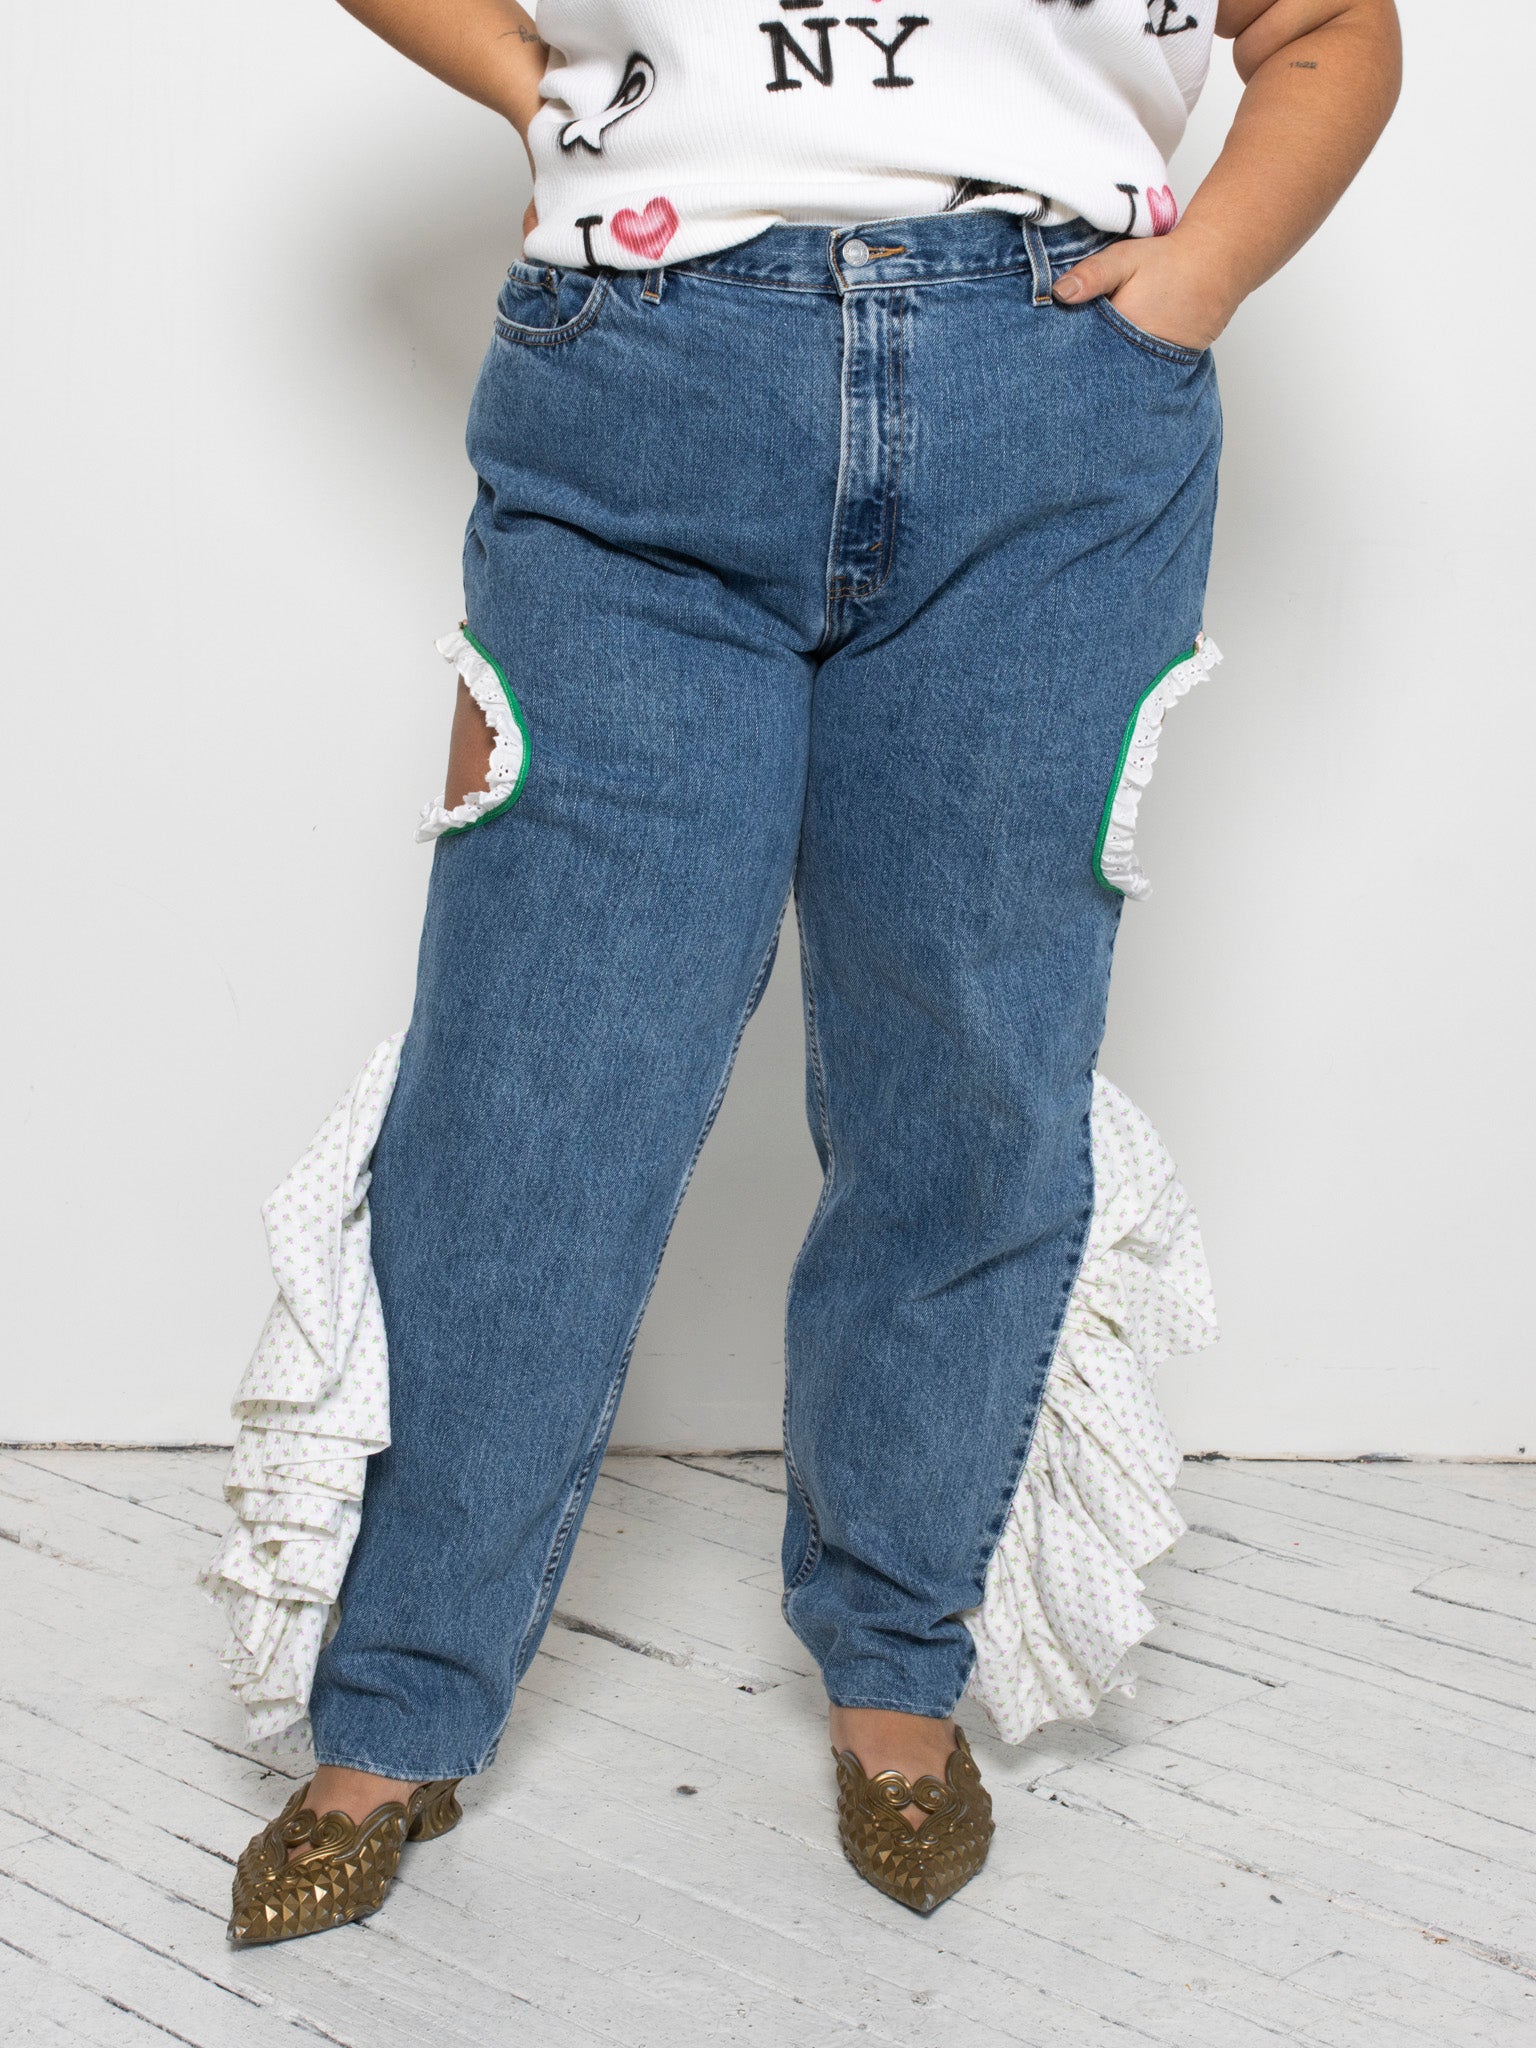 Megan O’Cain x BRZ Jeans - Jeanette Ruffle Jeans